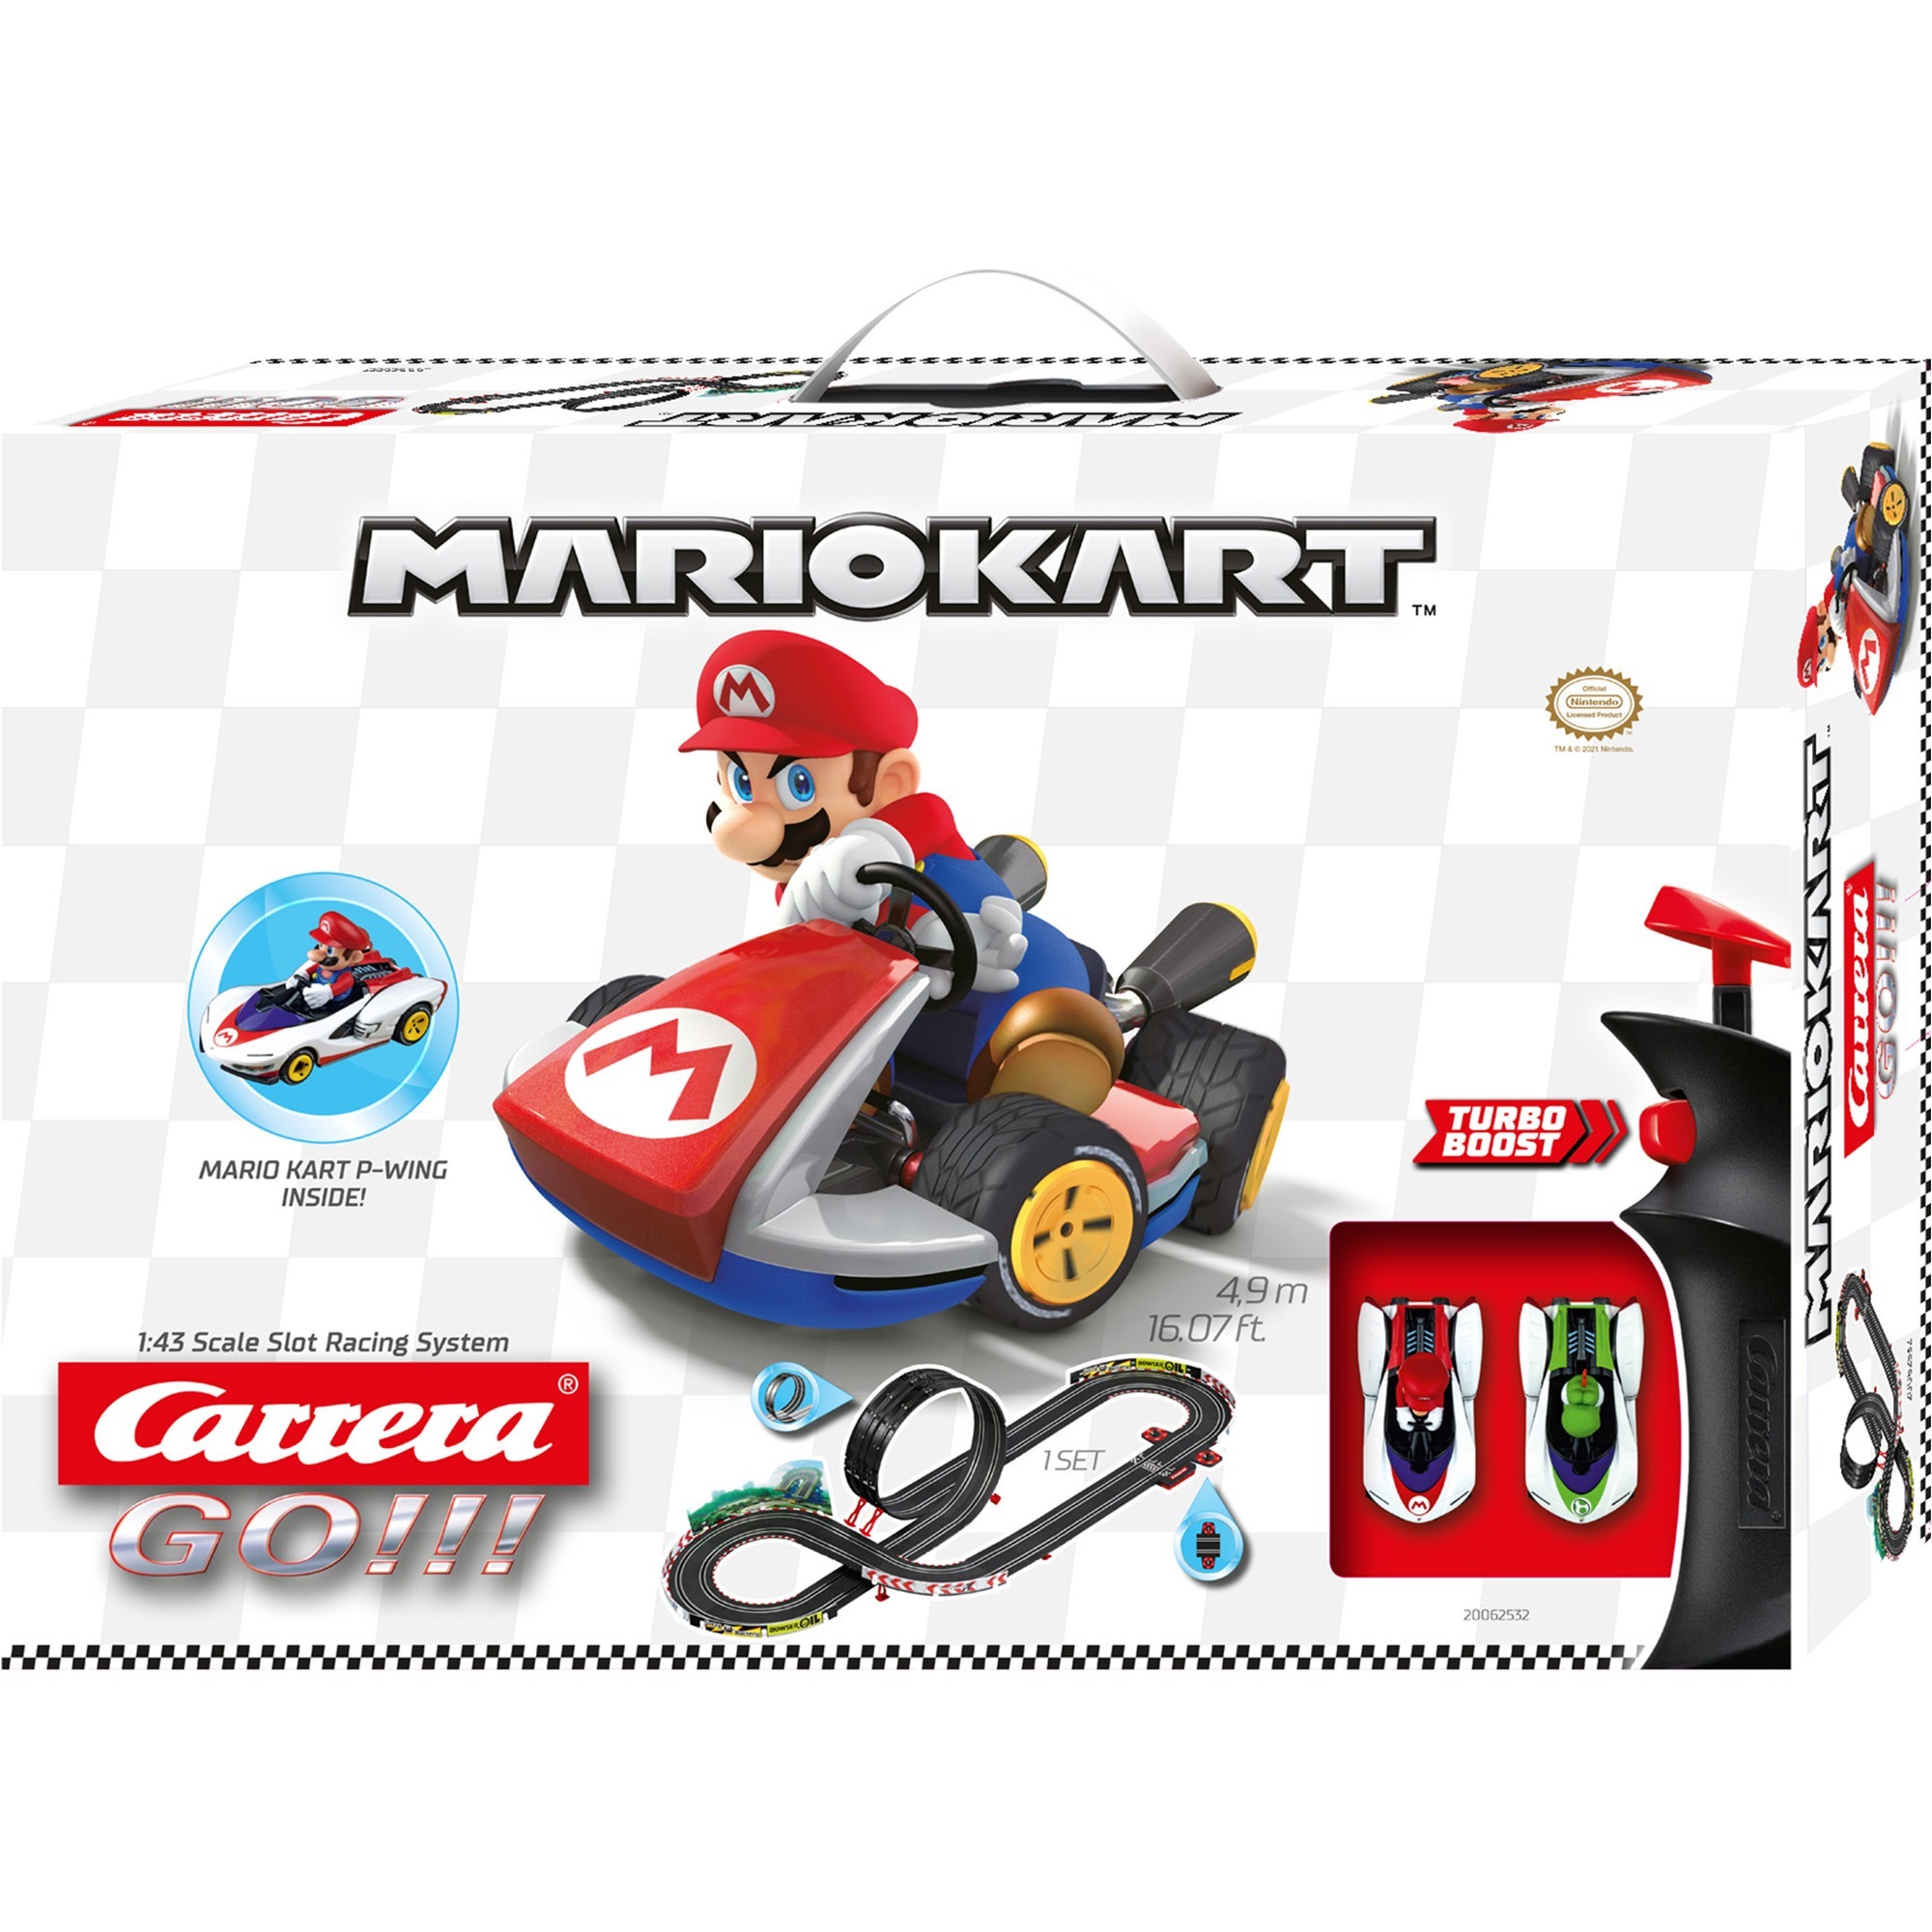 Spielzeug: Carrera GO!!! Nintendo Mario Kart - P-Wing, Rennbahn